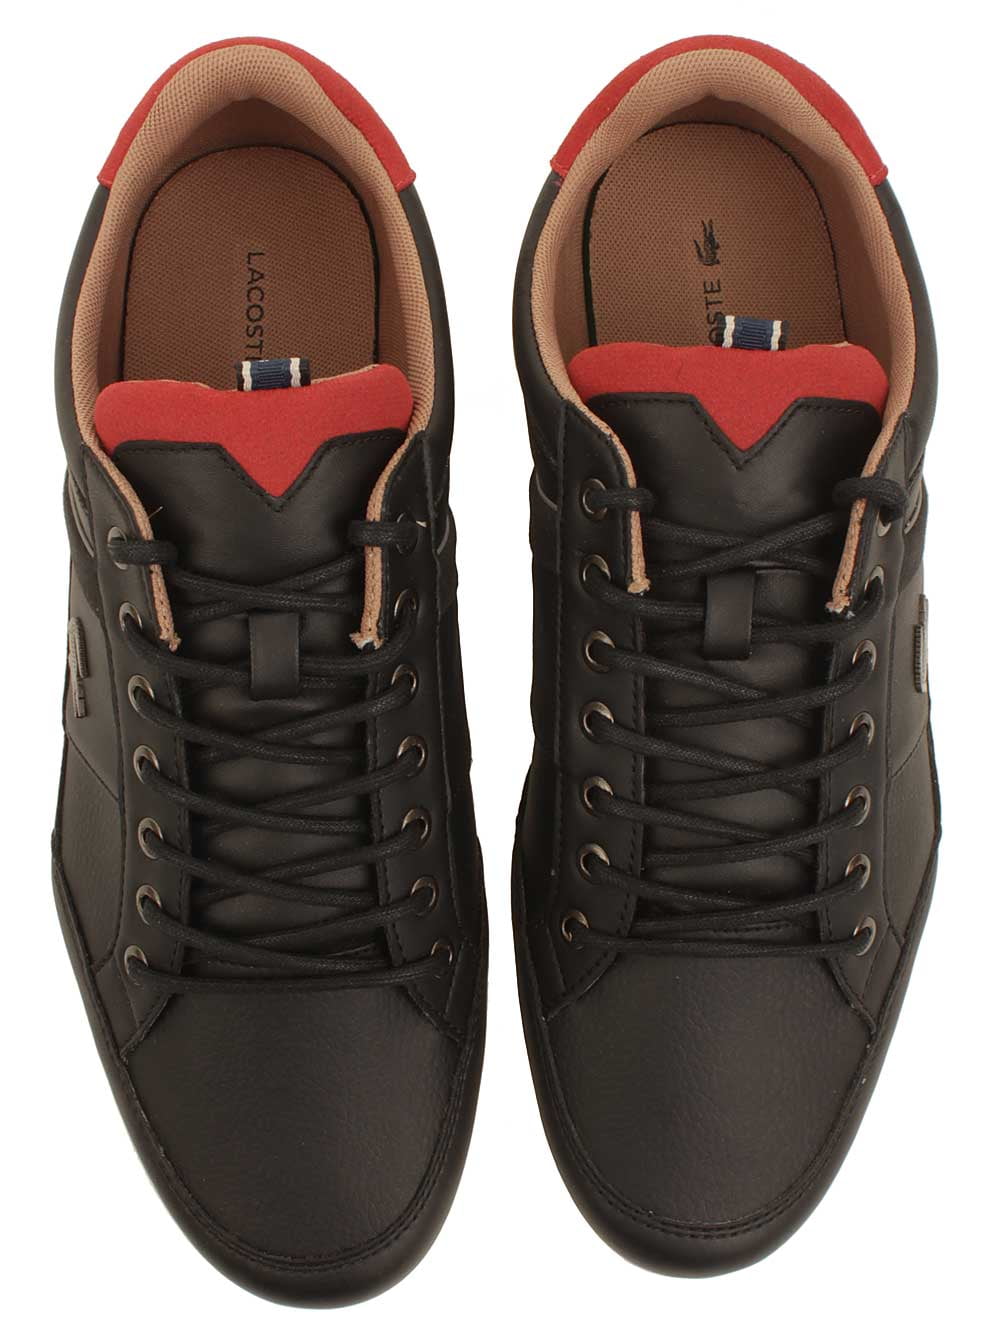 3 Color Options Lacoste Men's Chaymon 118 1 Fashion Sneaker 